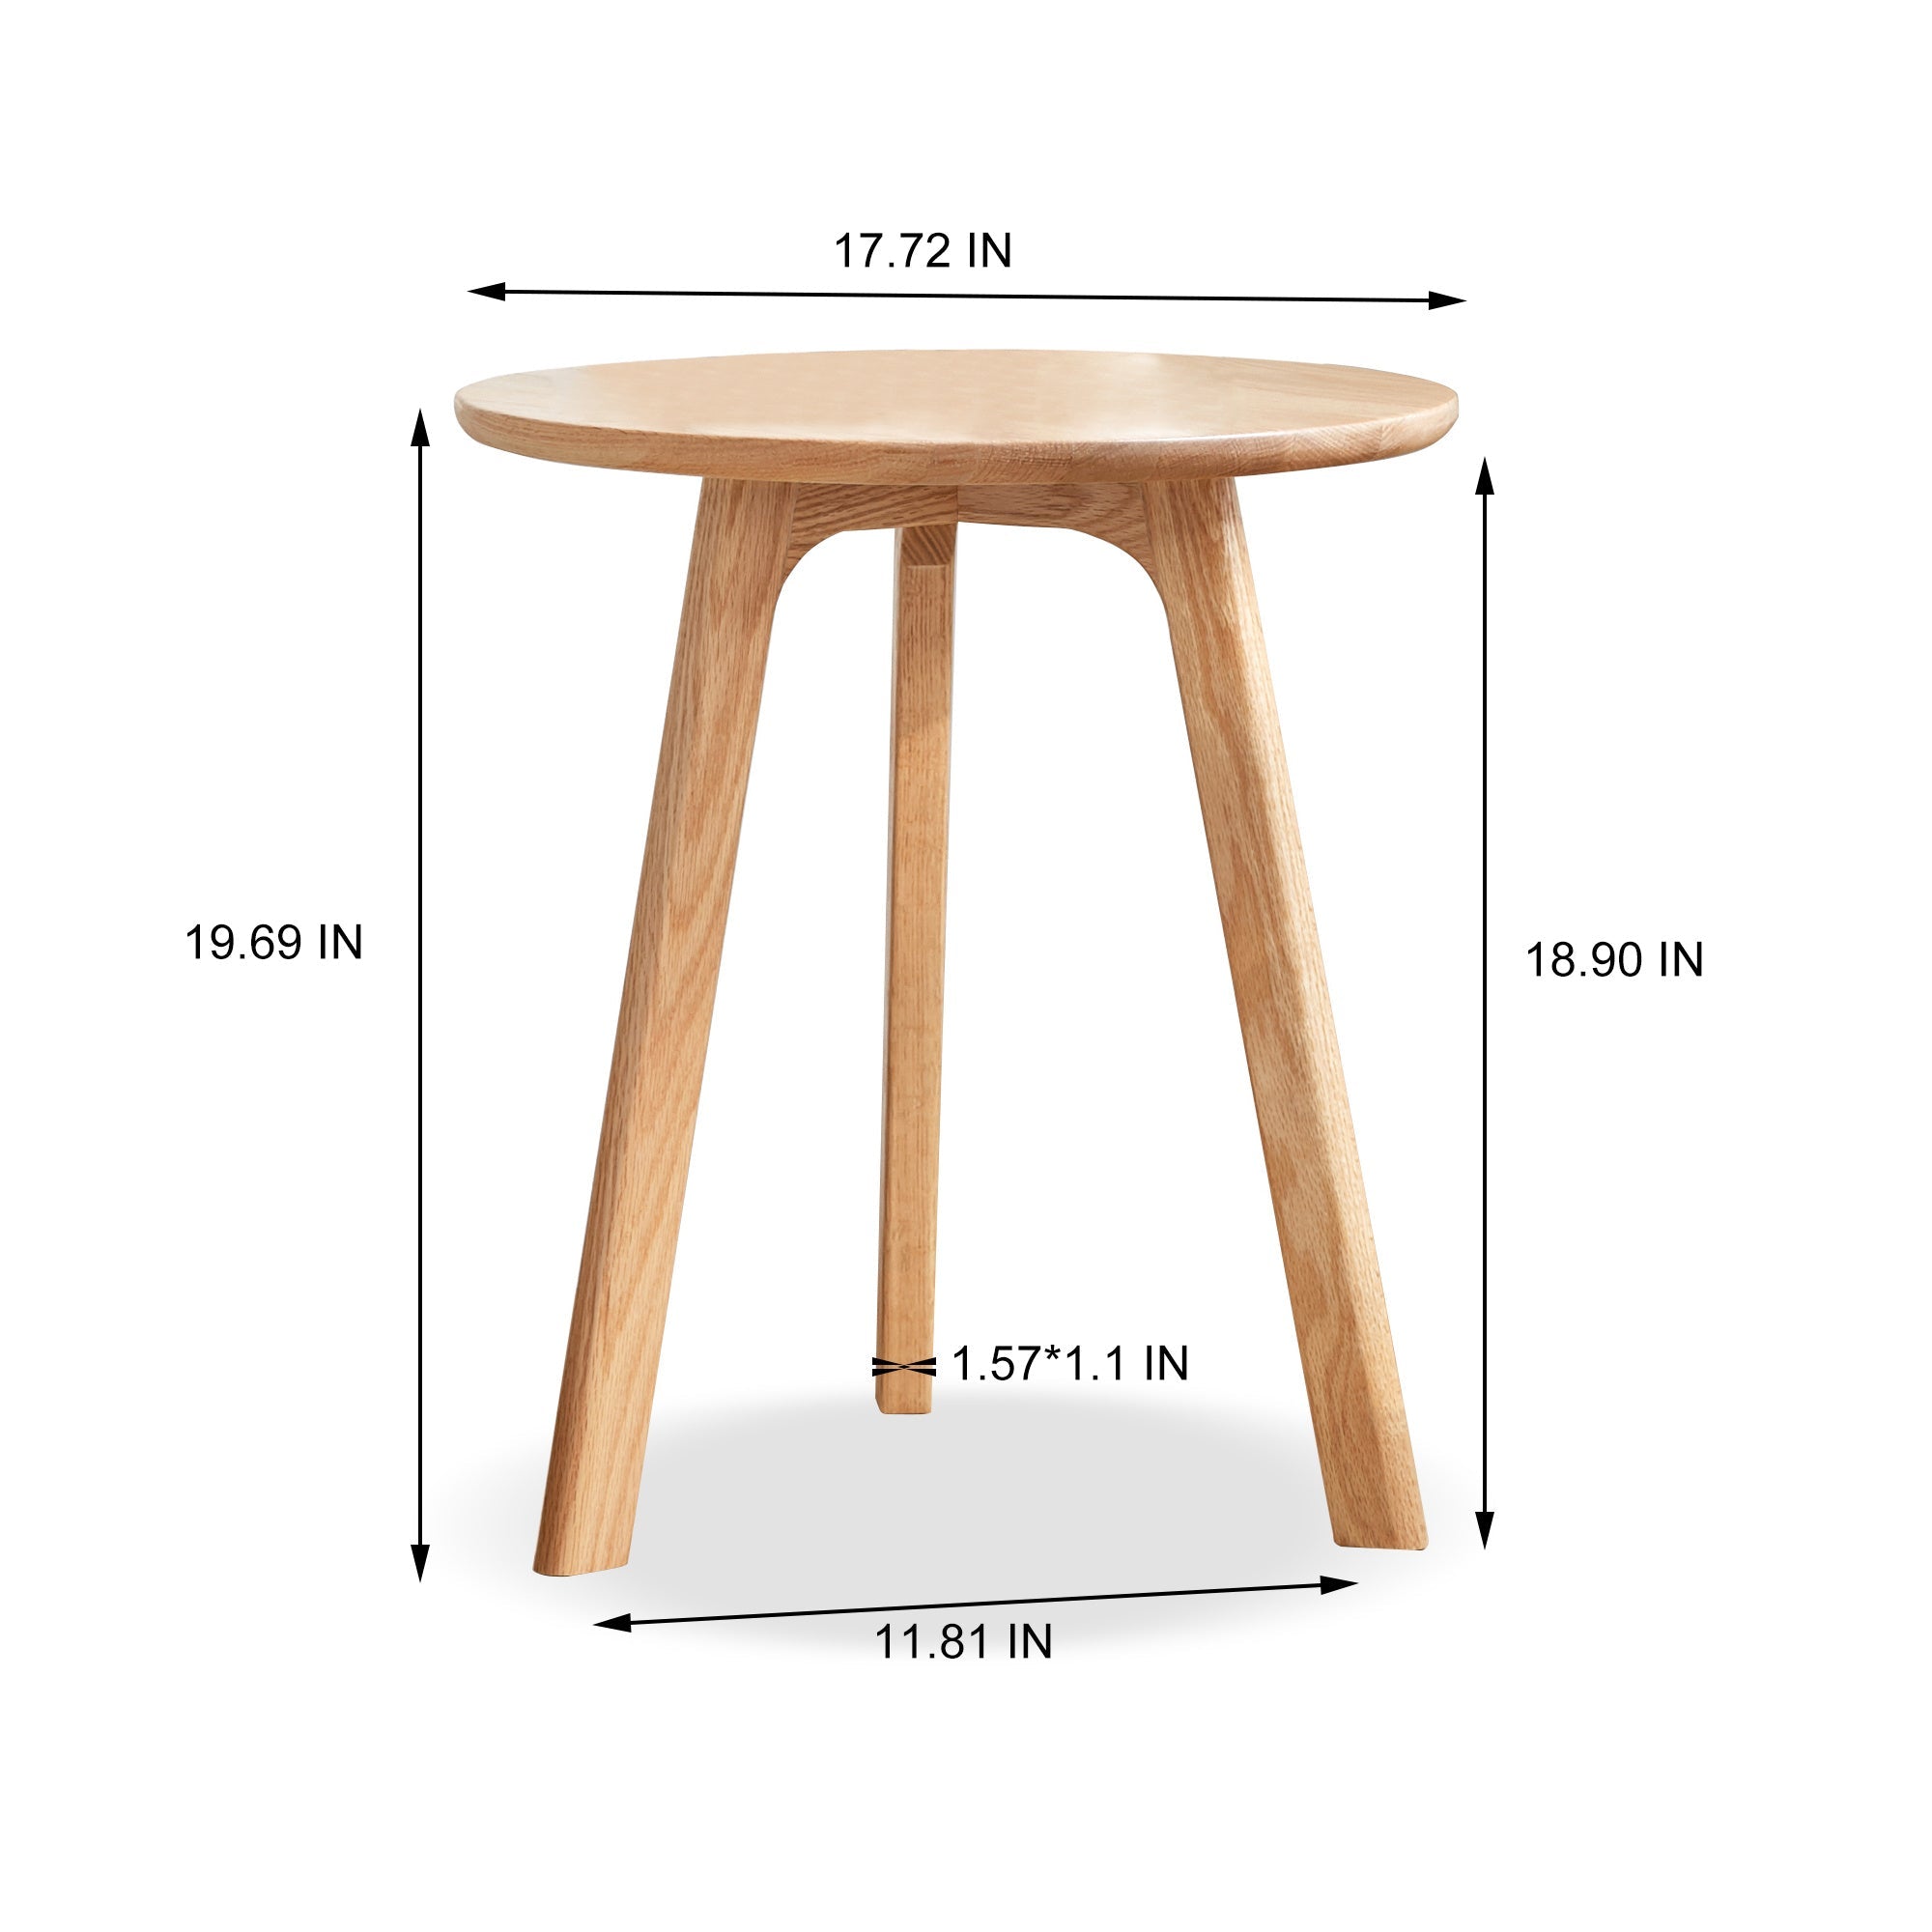 SolidOak/Table